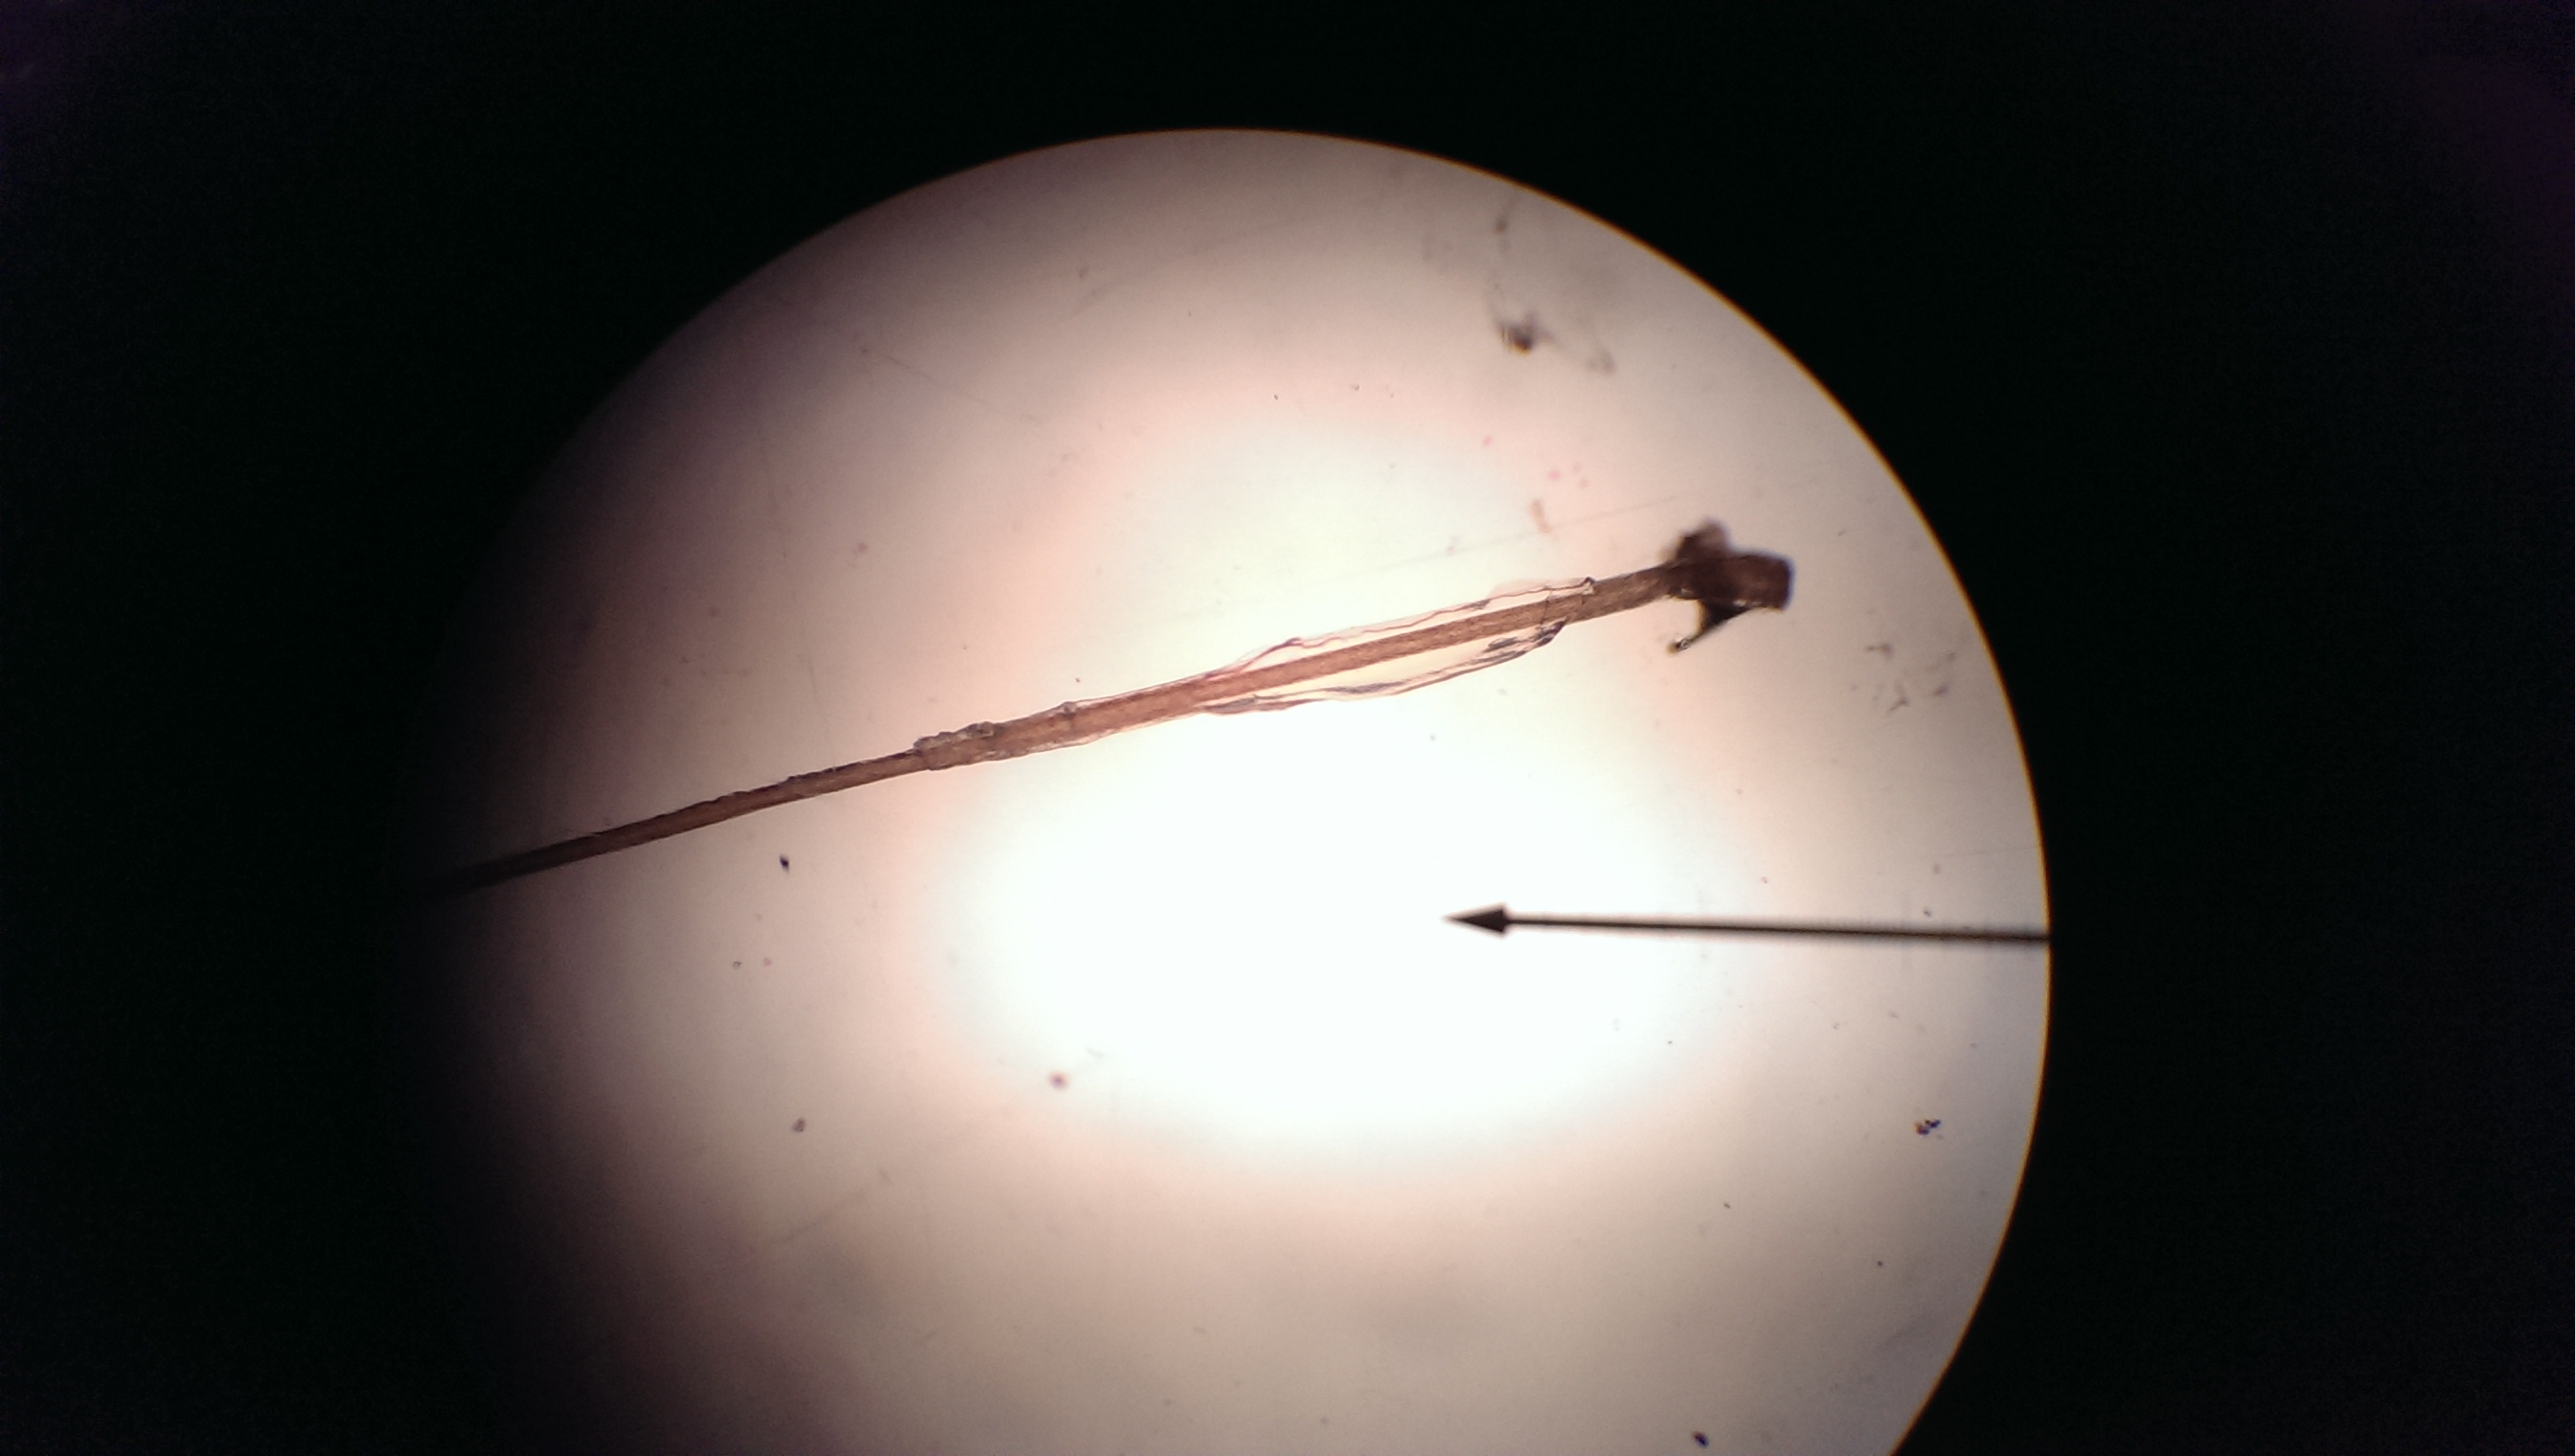 human hair under microscope 10x